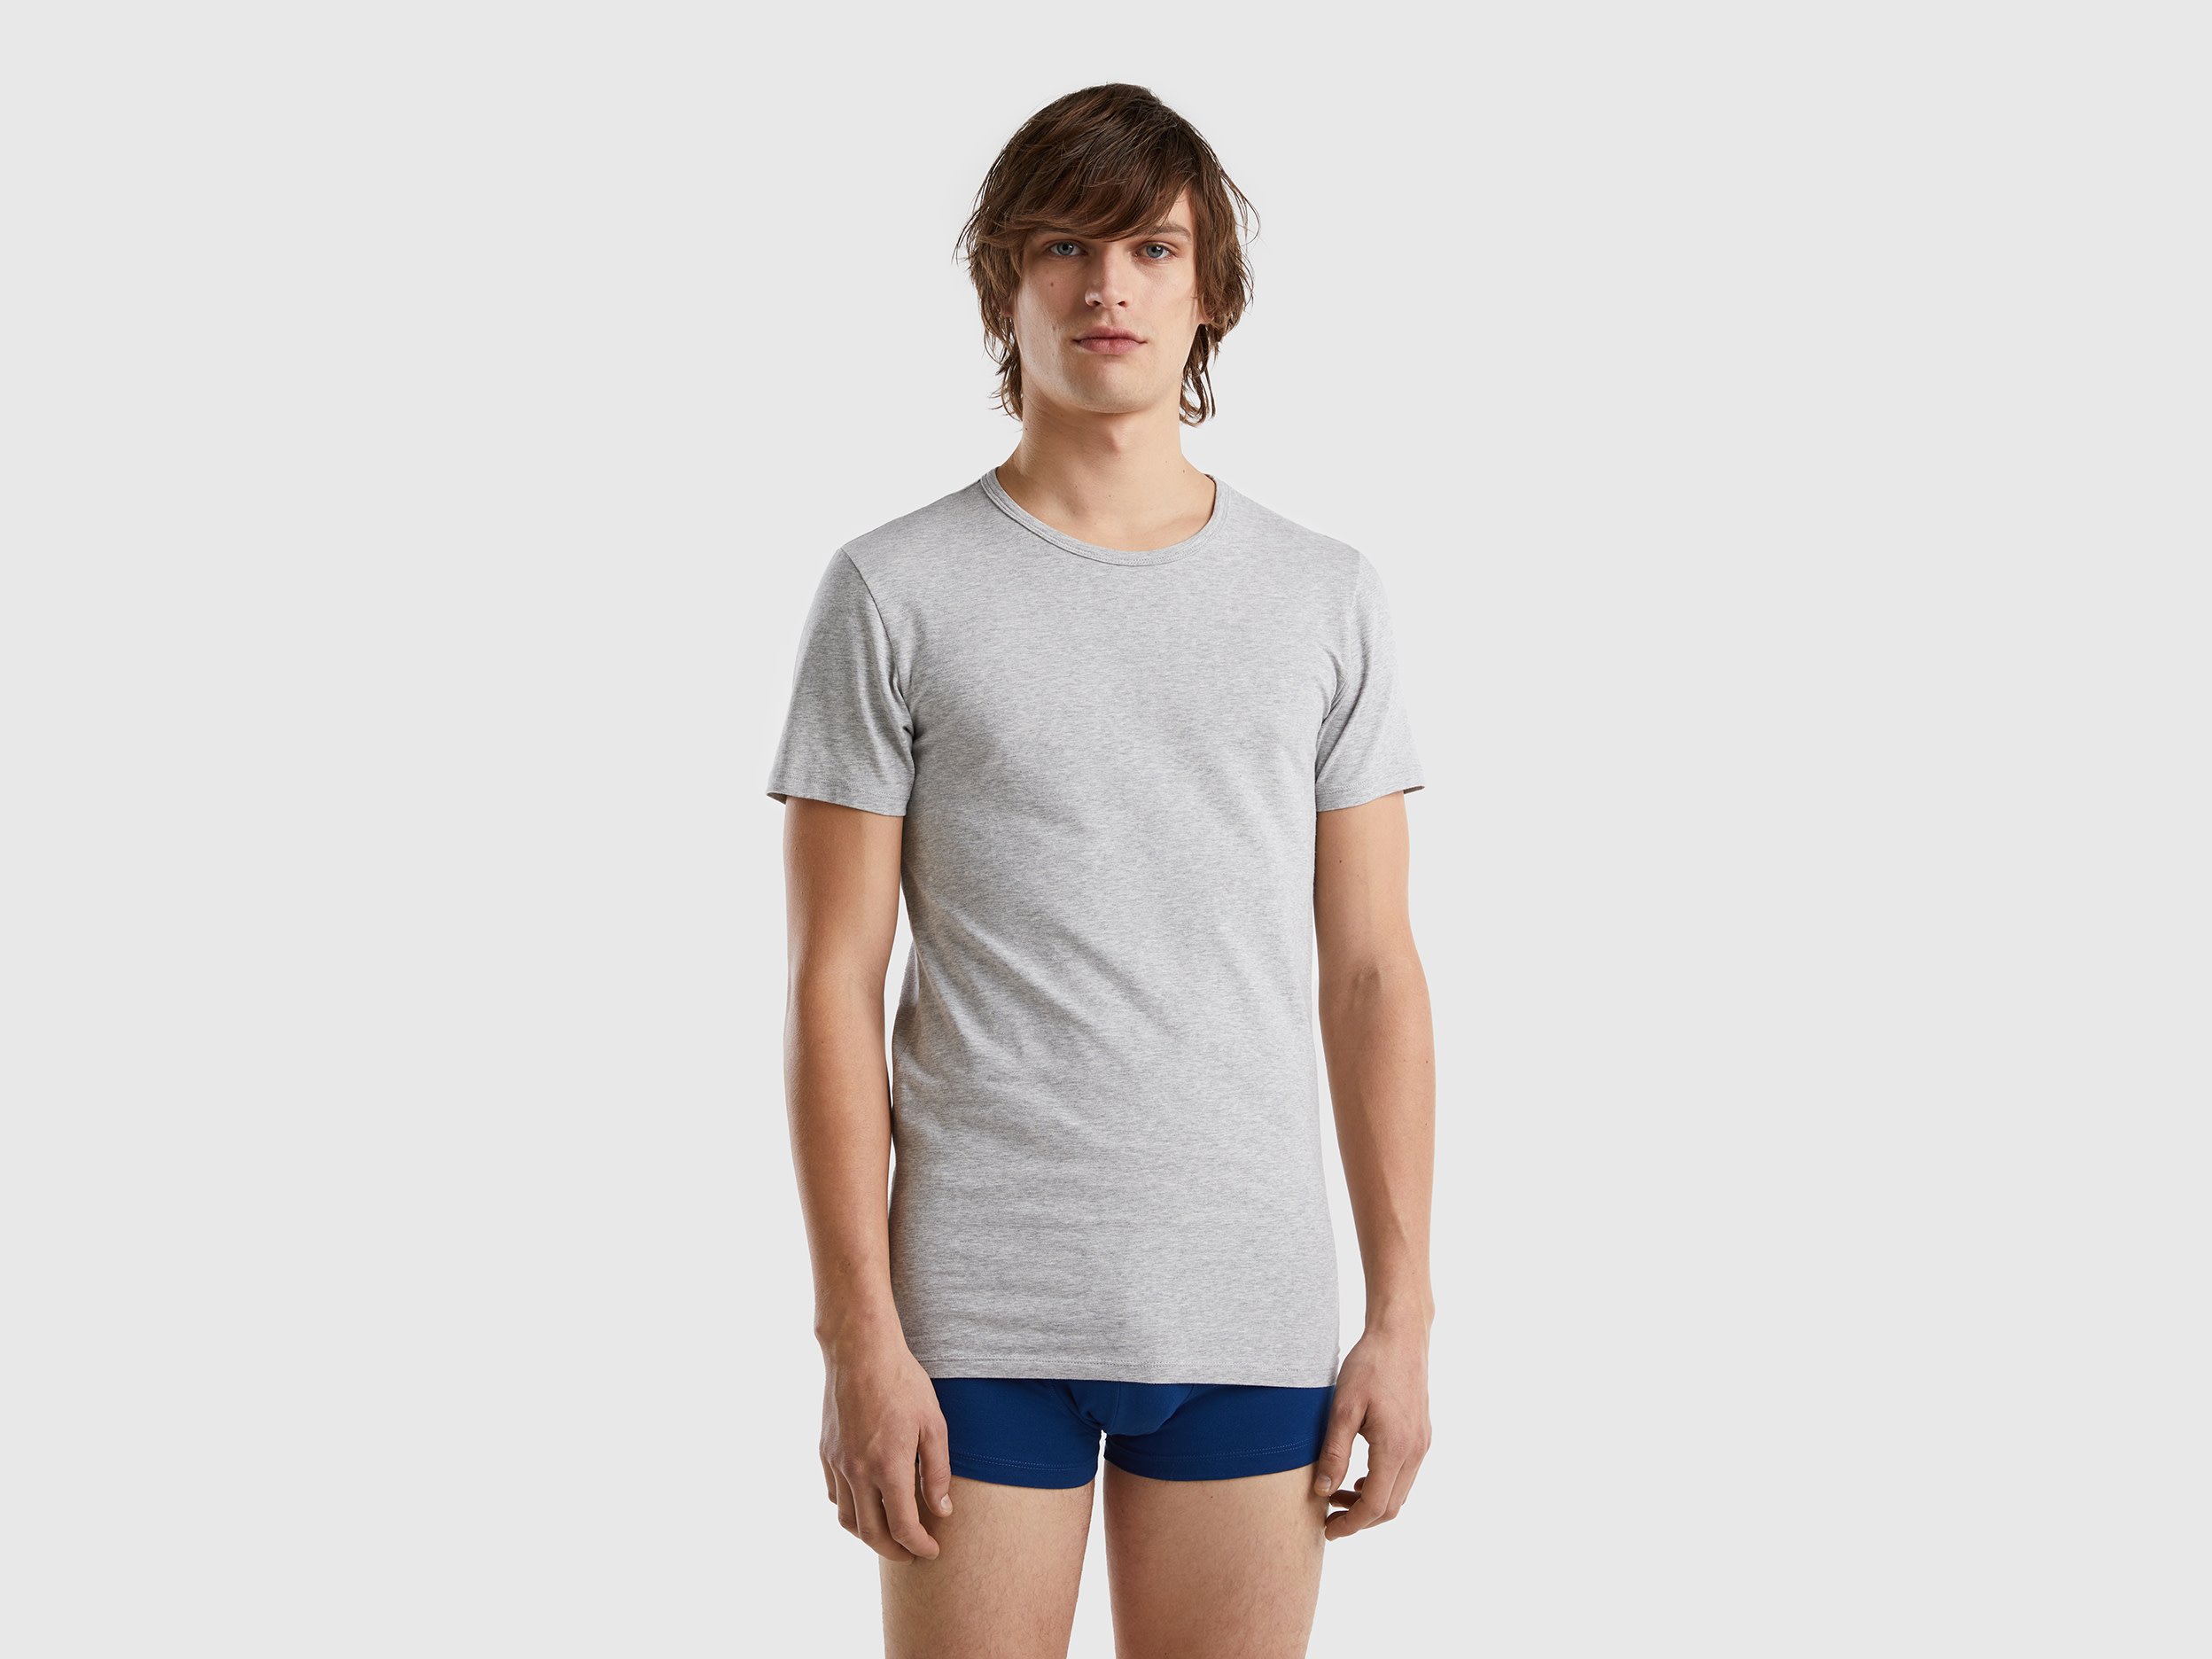 Benetton, Organic Stretch Cotton T-shirt, size XL, Light Gray, Men